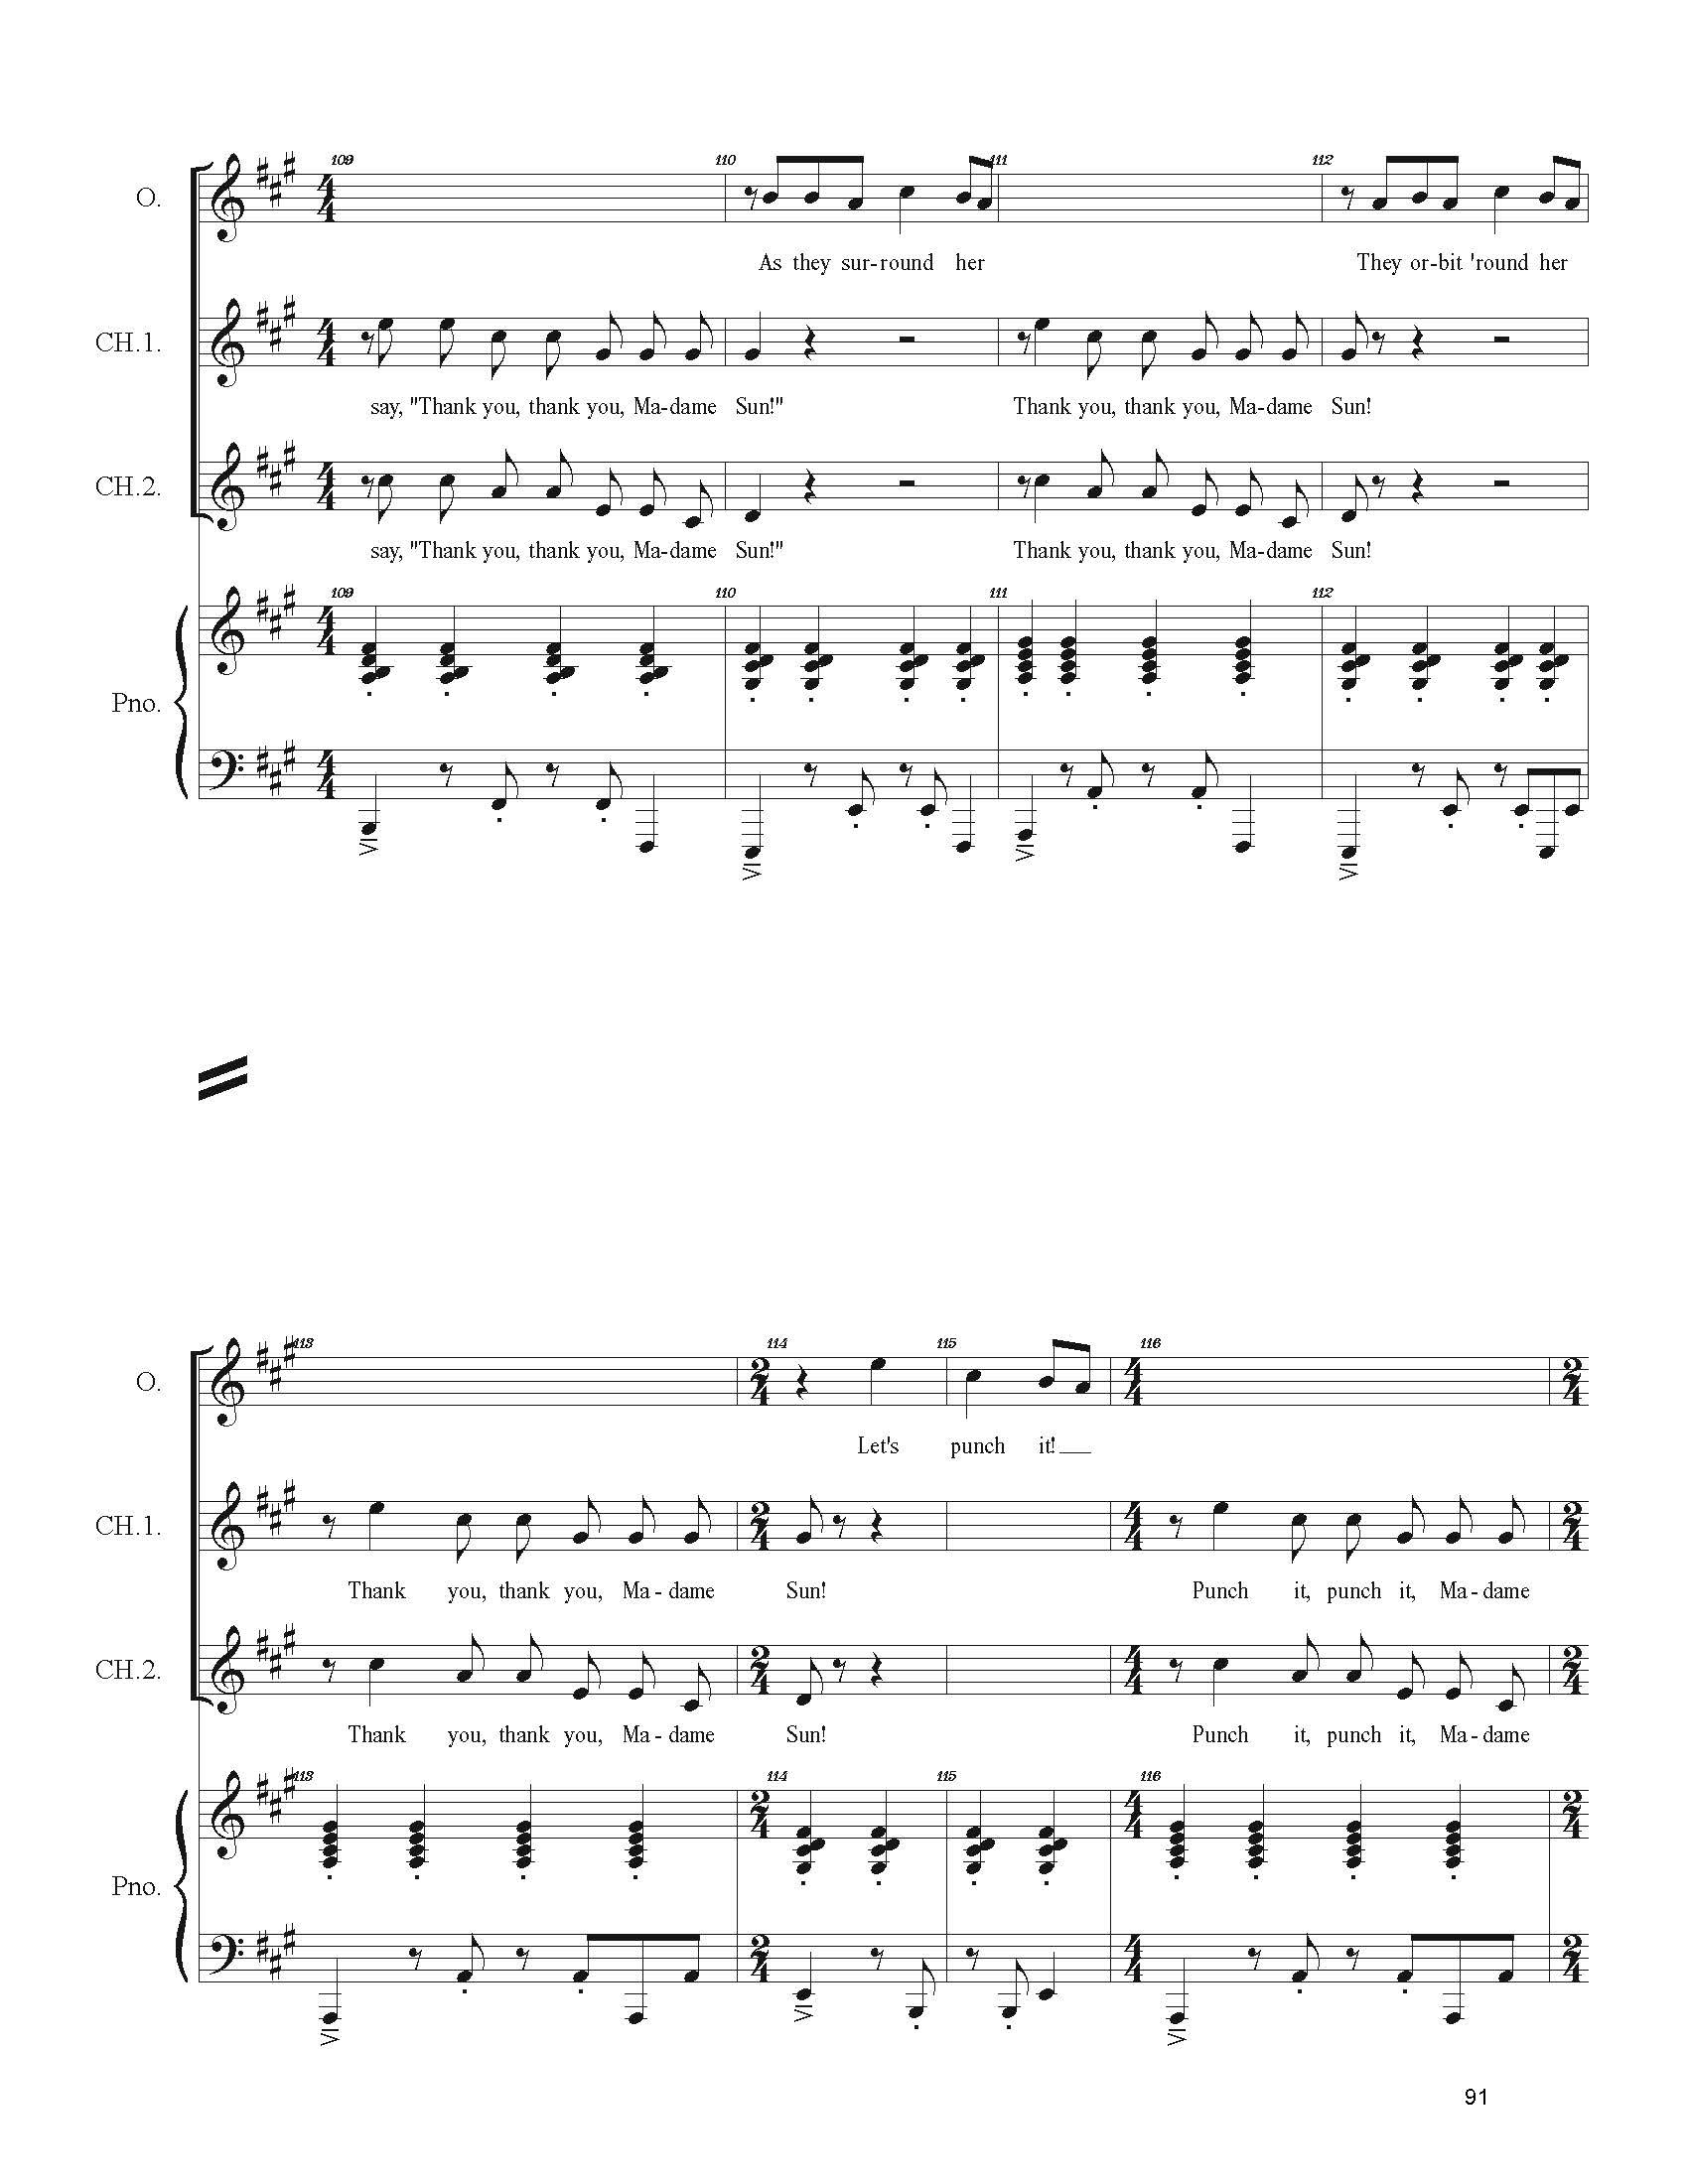 FULL PIANO VOCAL SCORE DRAFT 1 - Score_Page_091.jpg